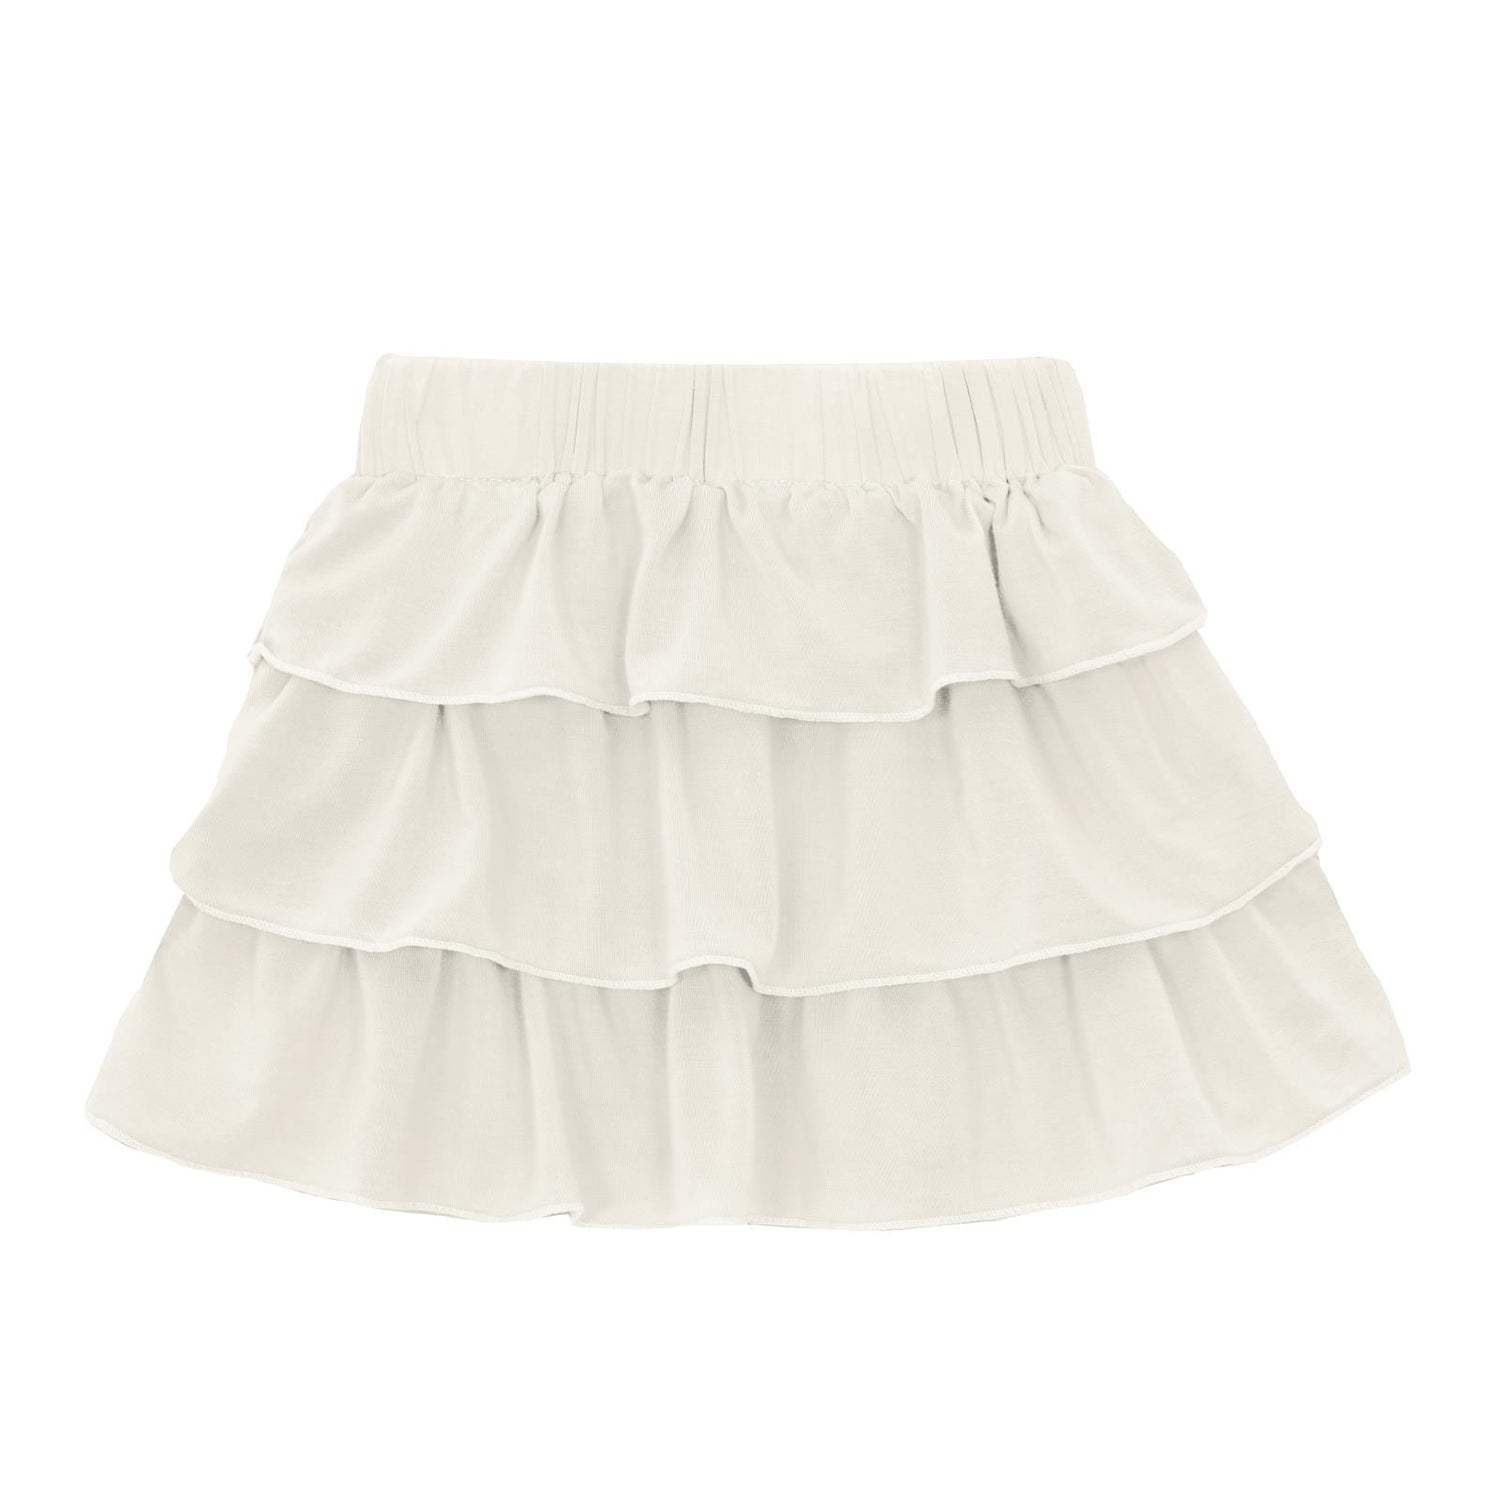 Layered Ruffle Skirt in Natural